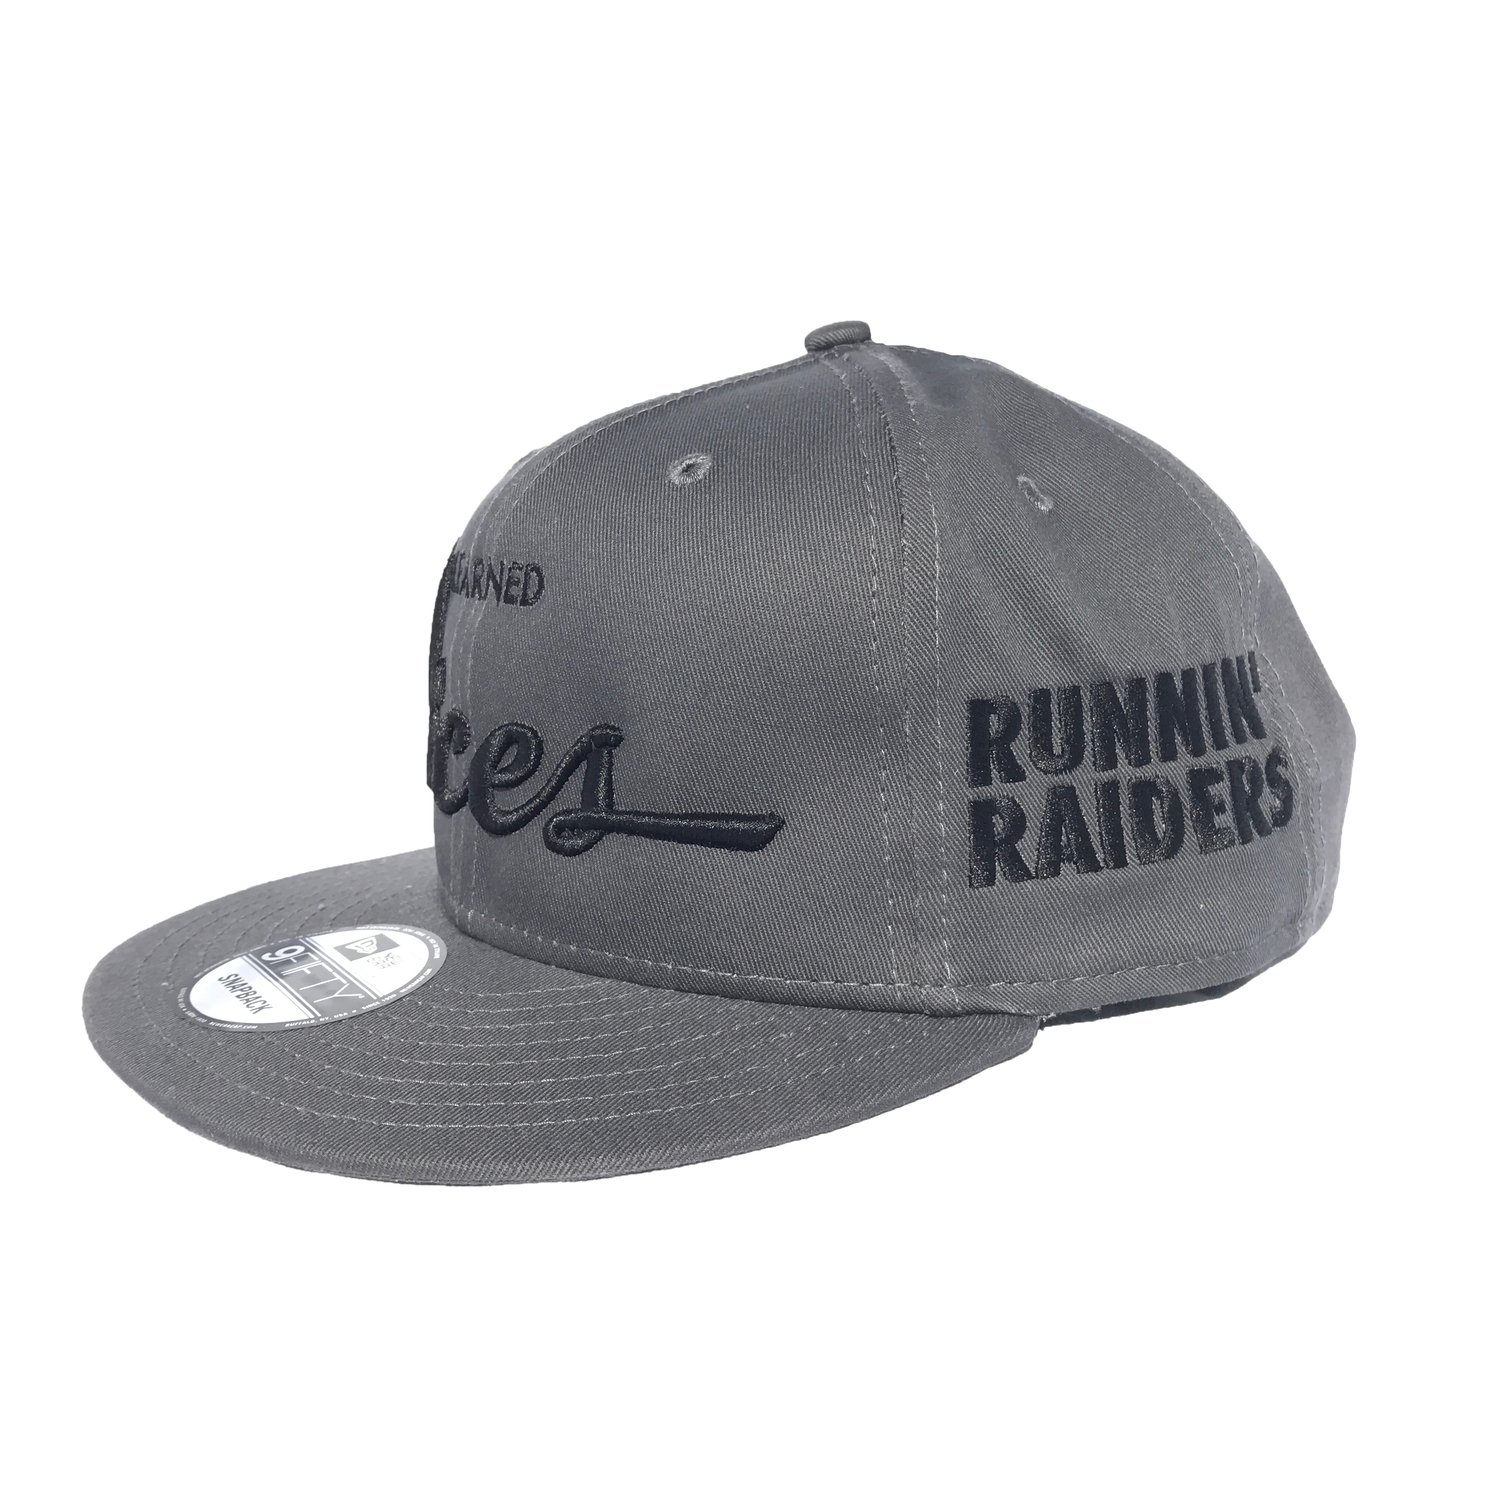 Image of Runnin' Raiders 1st Rounders Snapback - GRY/BLK 